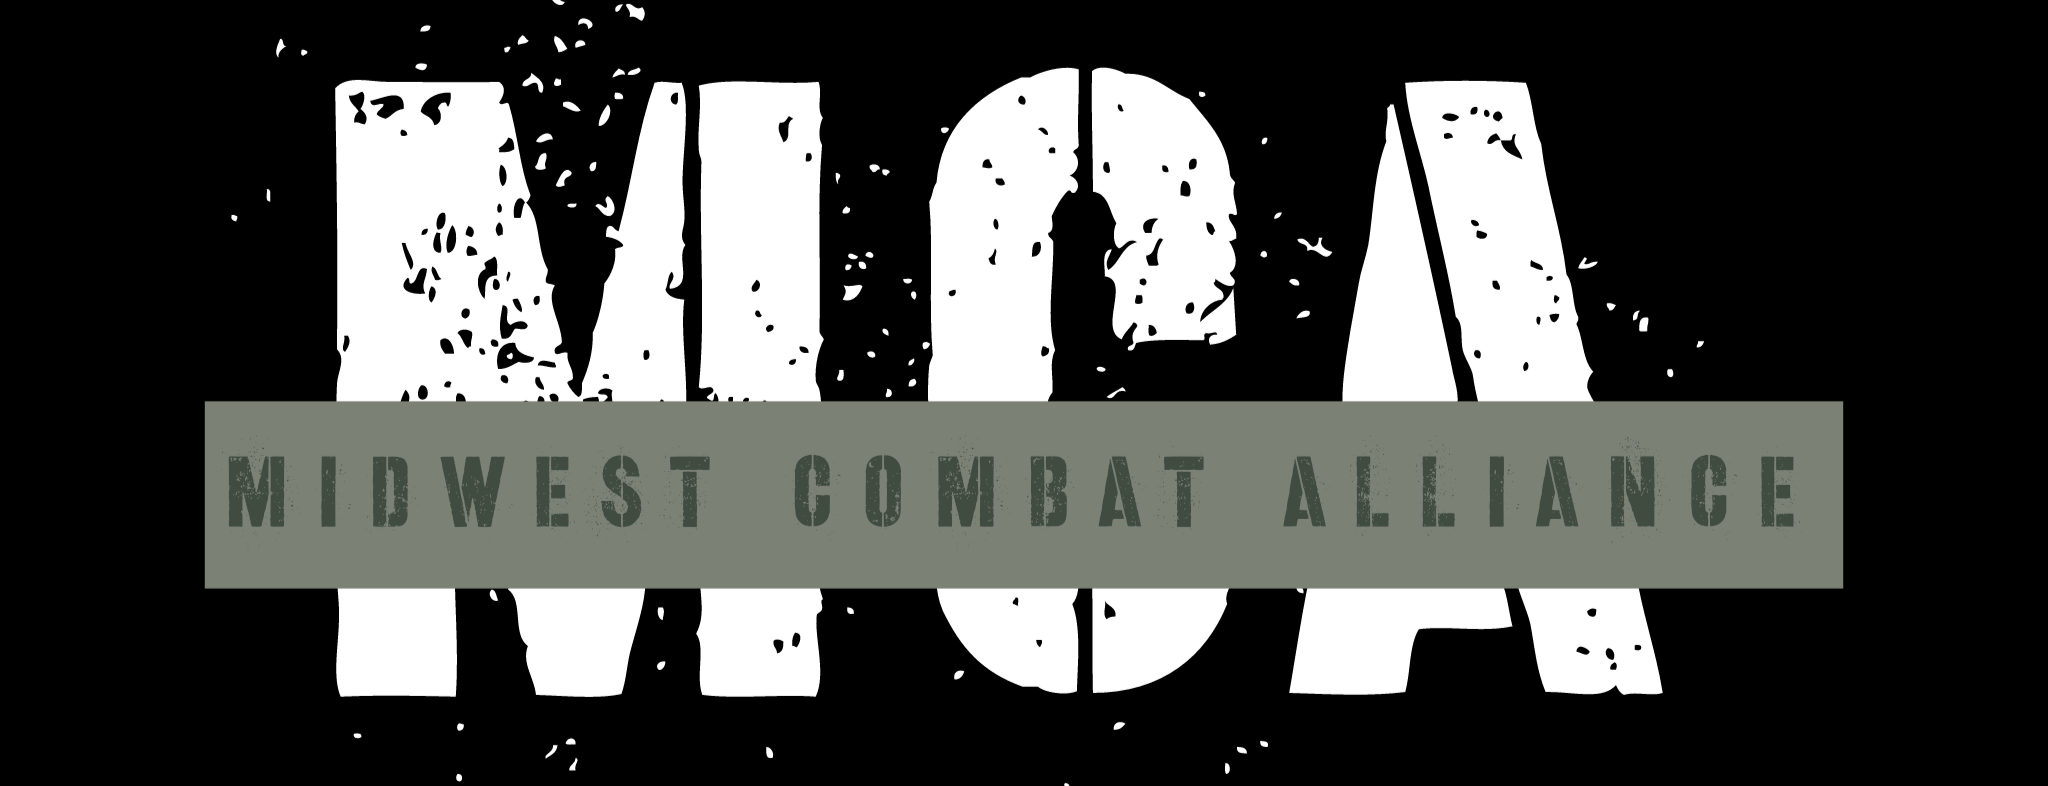 Midwest Combat Alliance